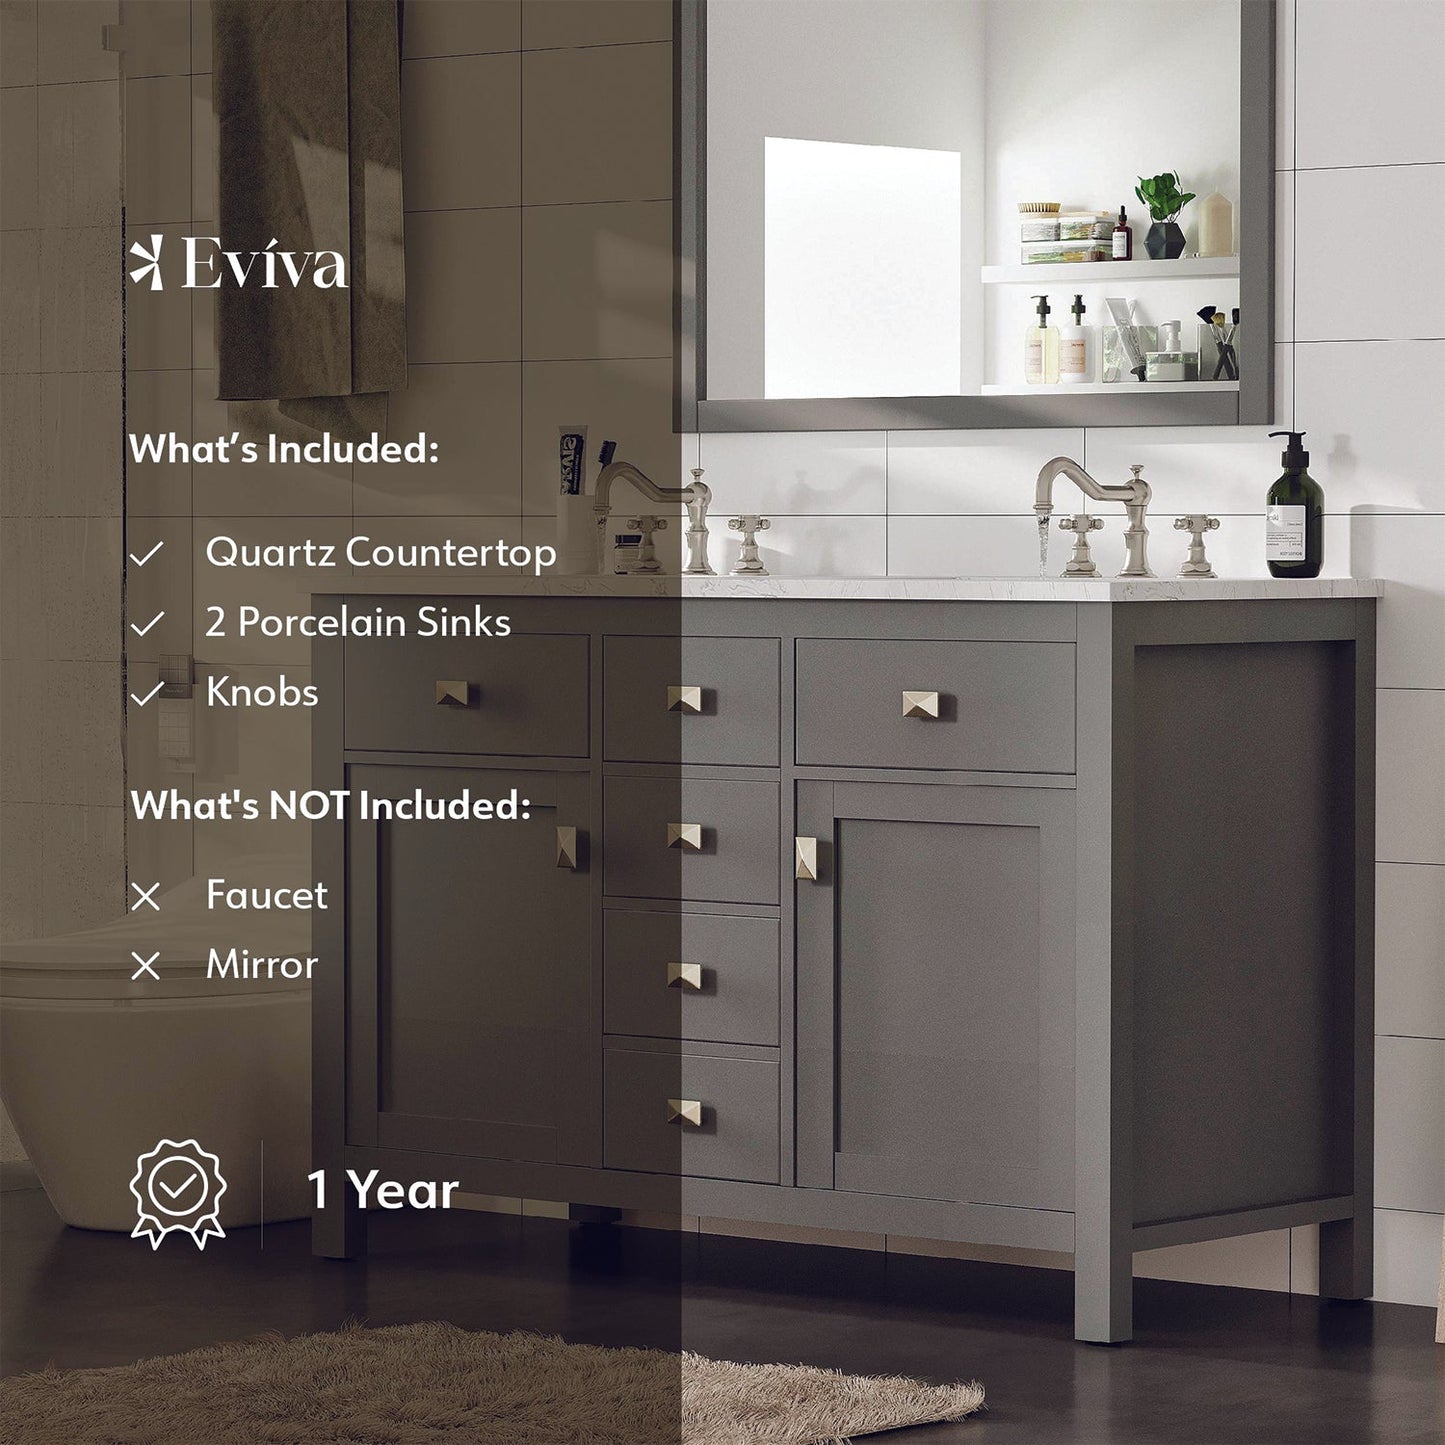 Artemis 48"W x 22"D Gray Double Sink Bathroom Vanity with Carrara Quartz Countertop and Undermount Porcelain Sink